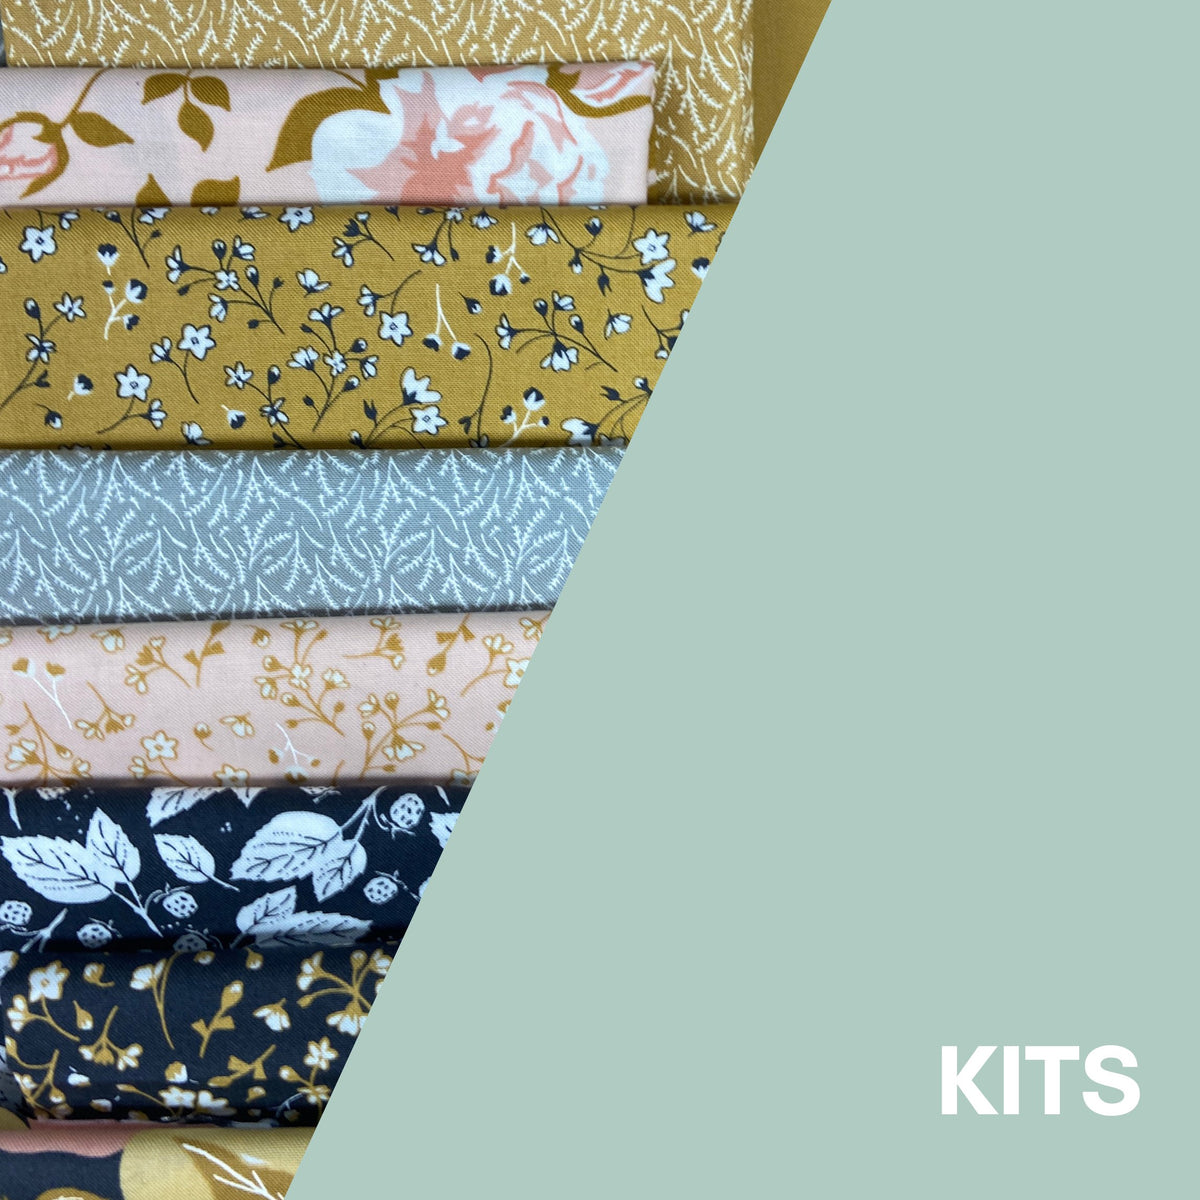 Wool & Applique Kits – Calico Hutch